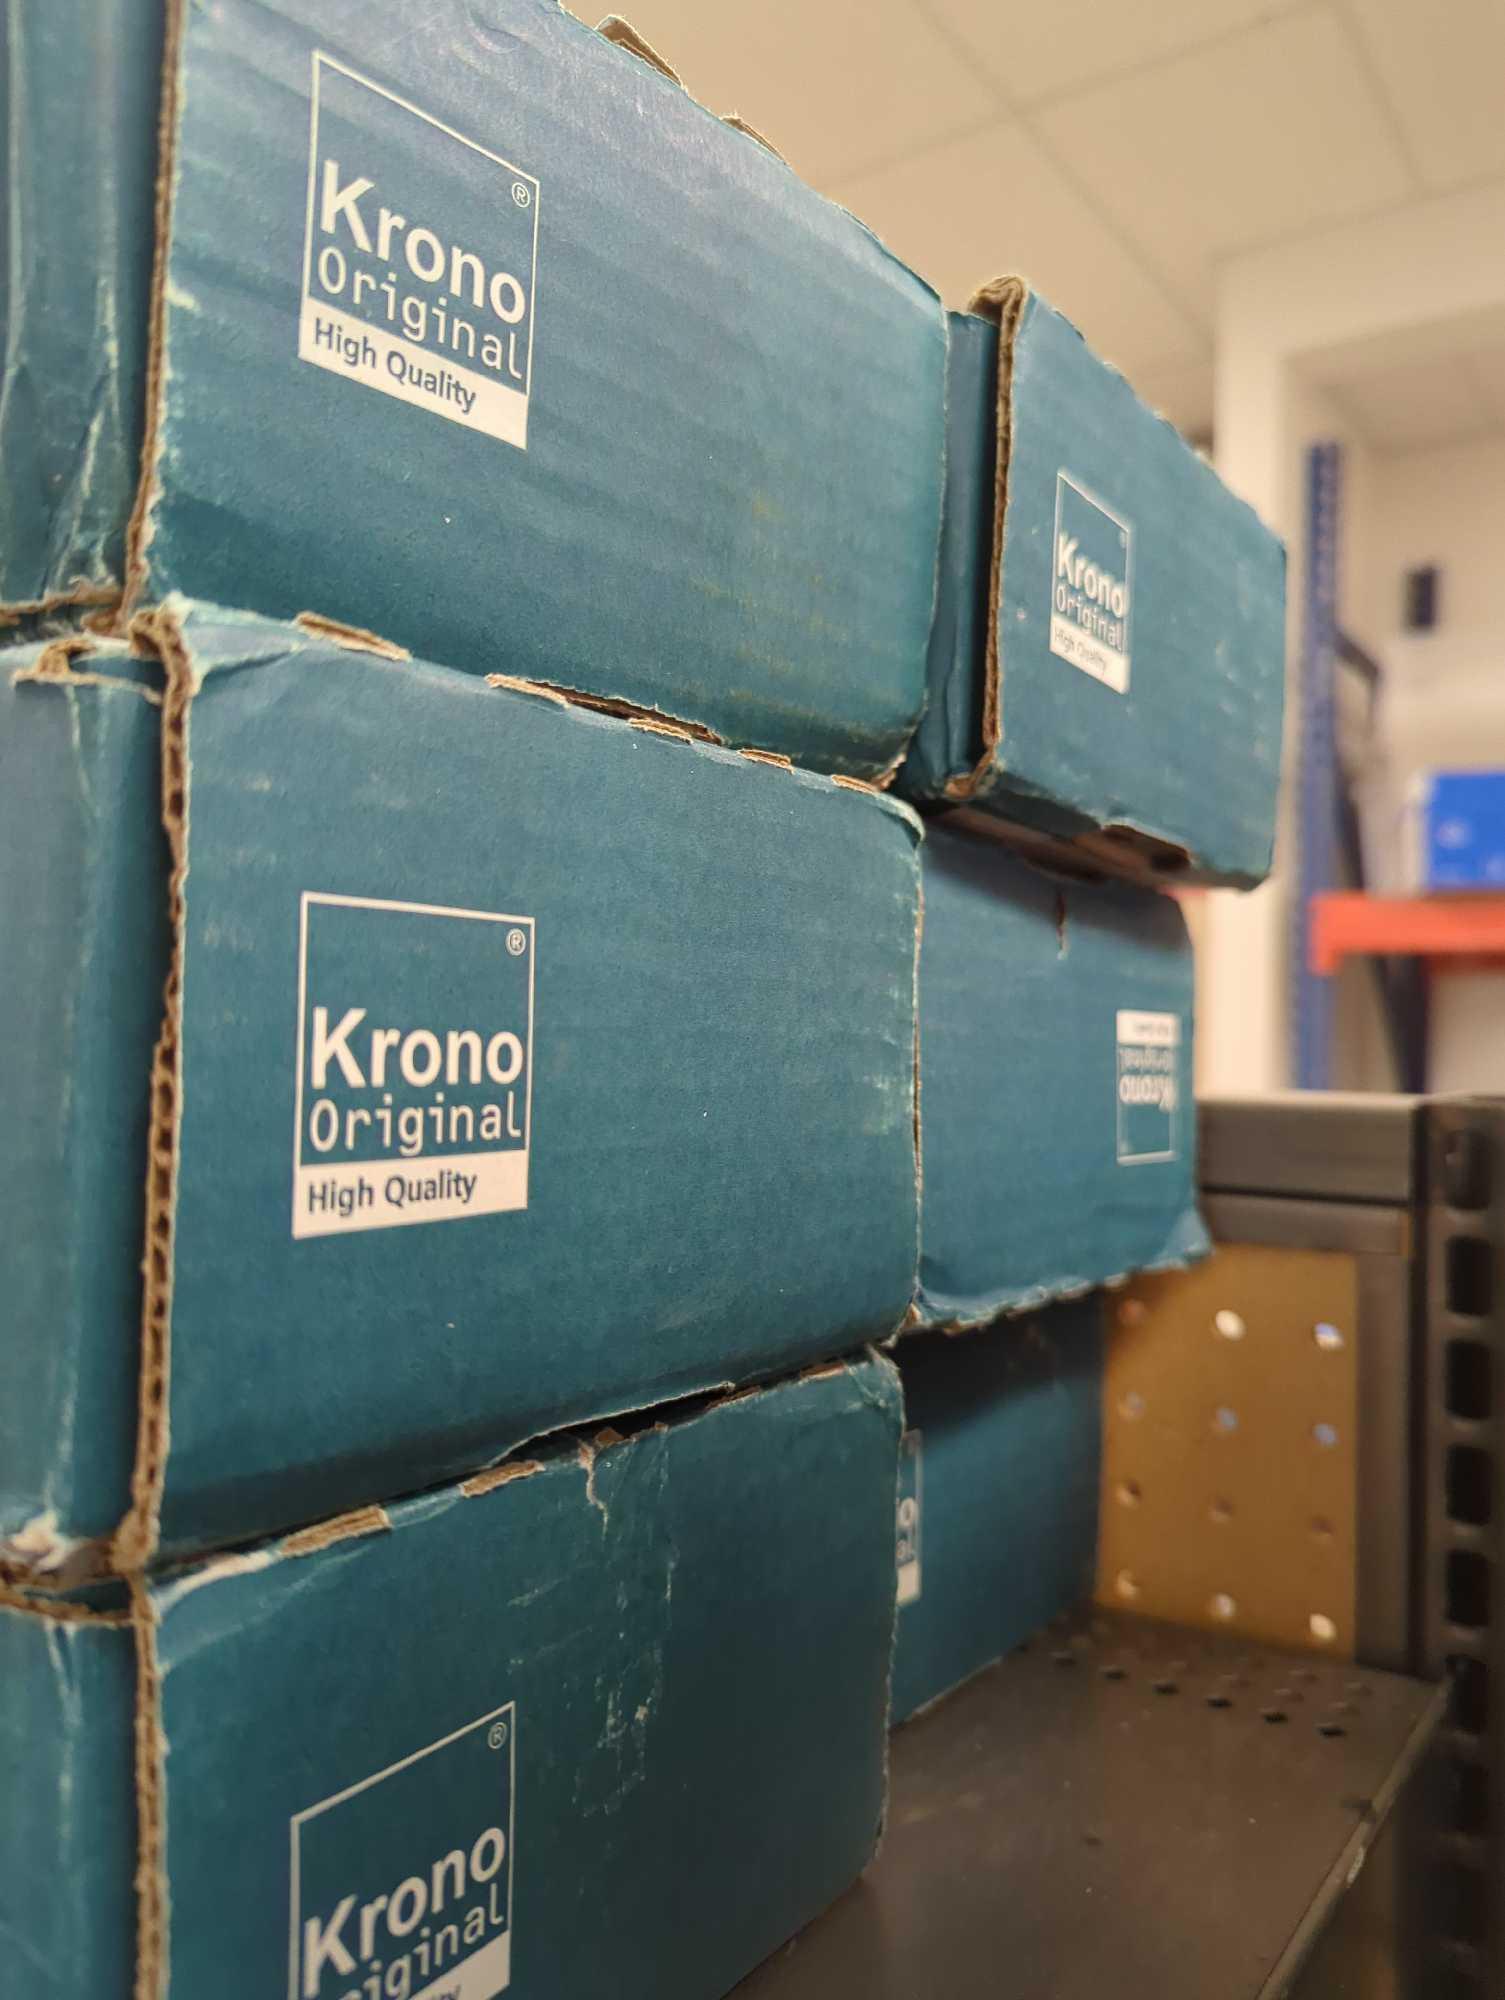 Lot of 7 Cases of Krono Original Laguna Oak Herringbone 8mm T x 4.96 in. W Waterproof Laminate Wood